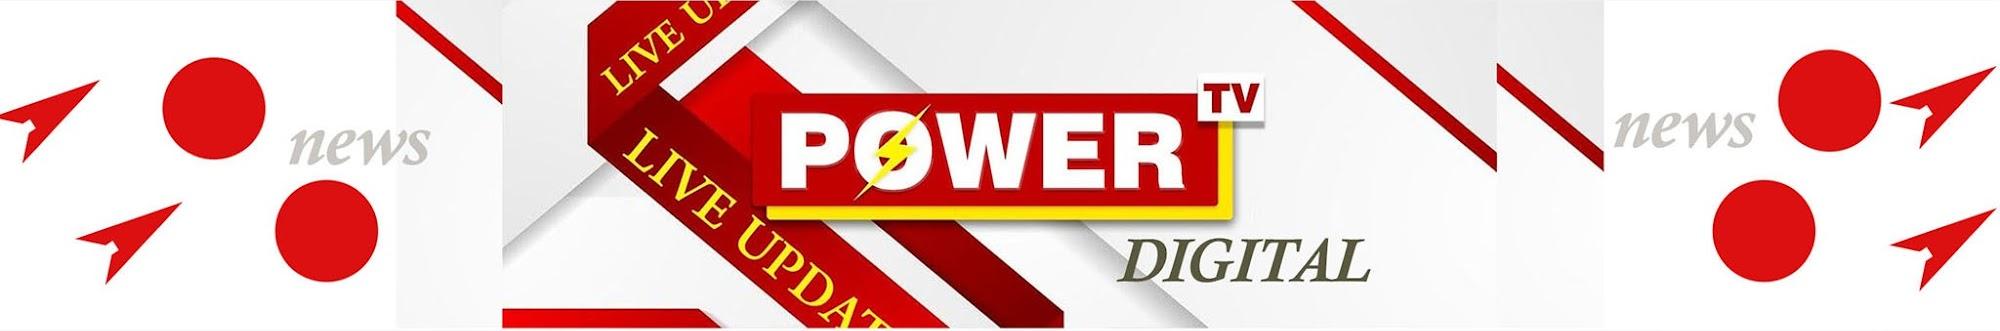 Power TV News